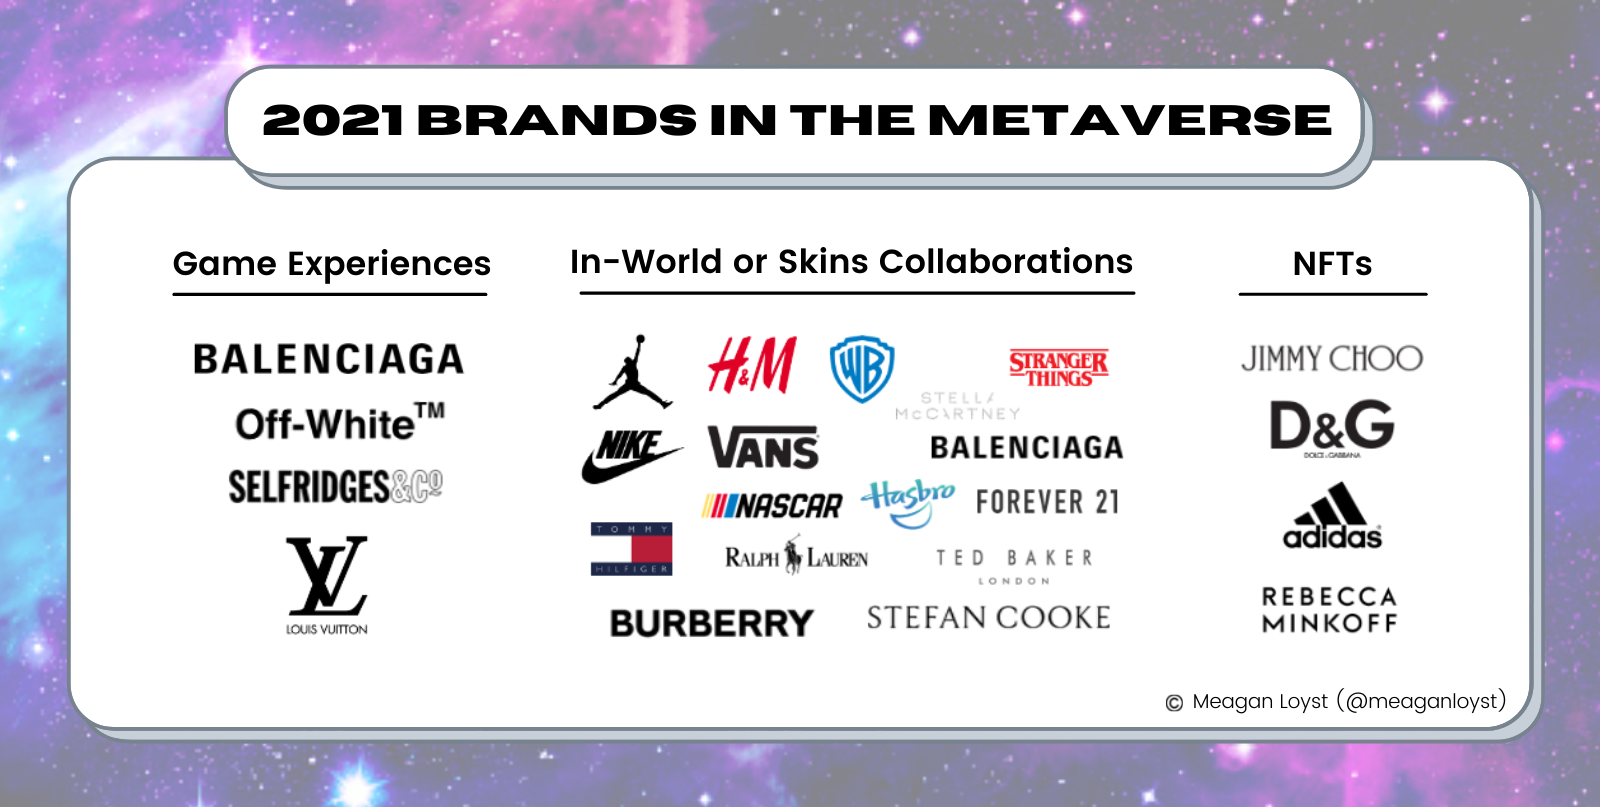 Brands can create collaborations across platform/strategy, like Balenciaga & Ralph Lauren